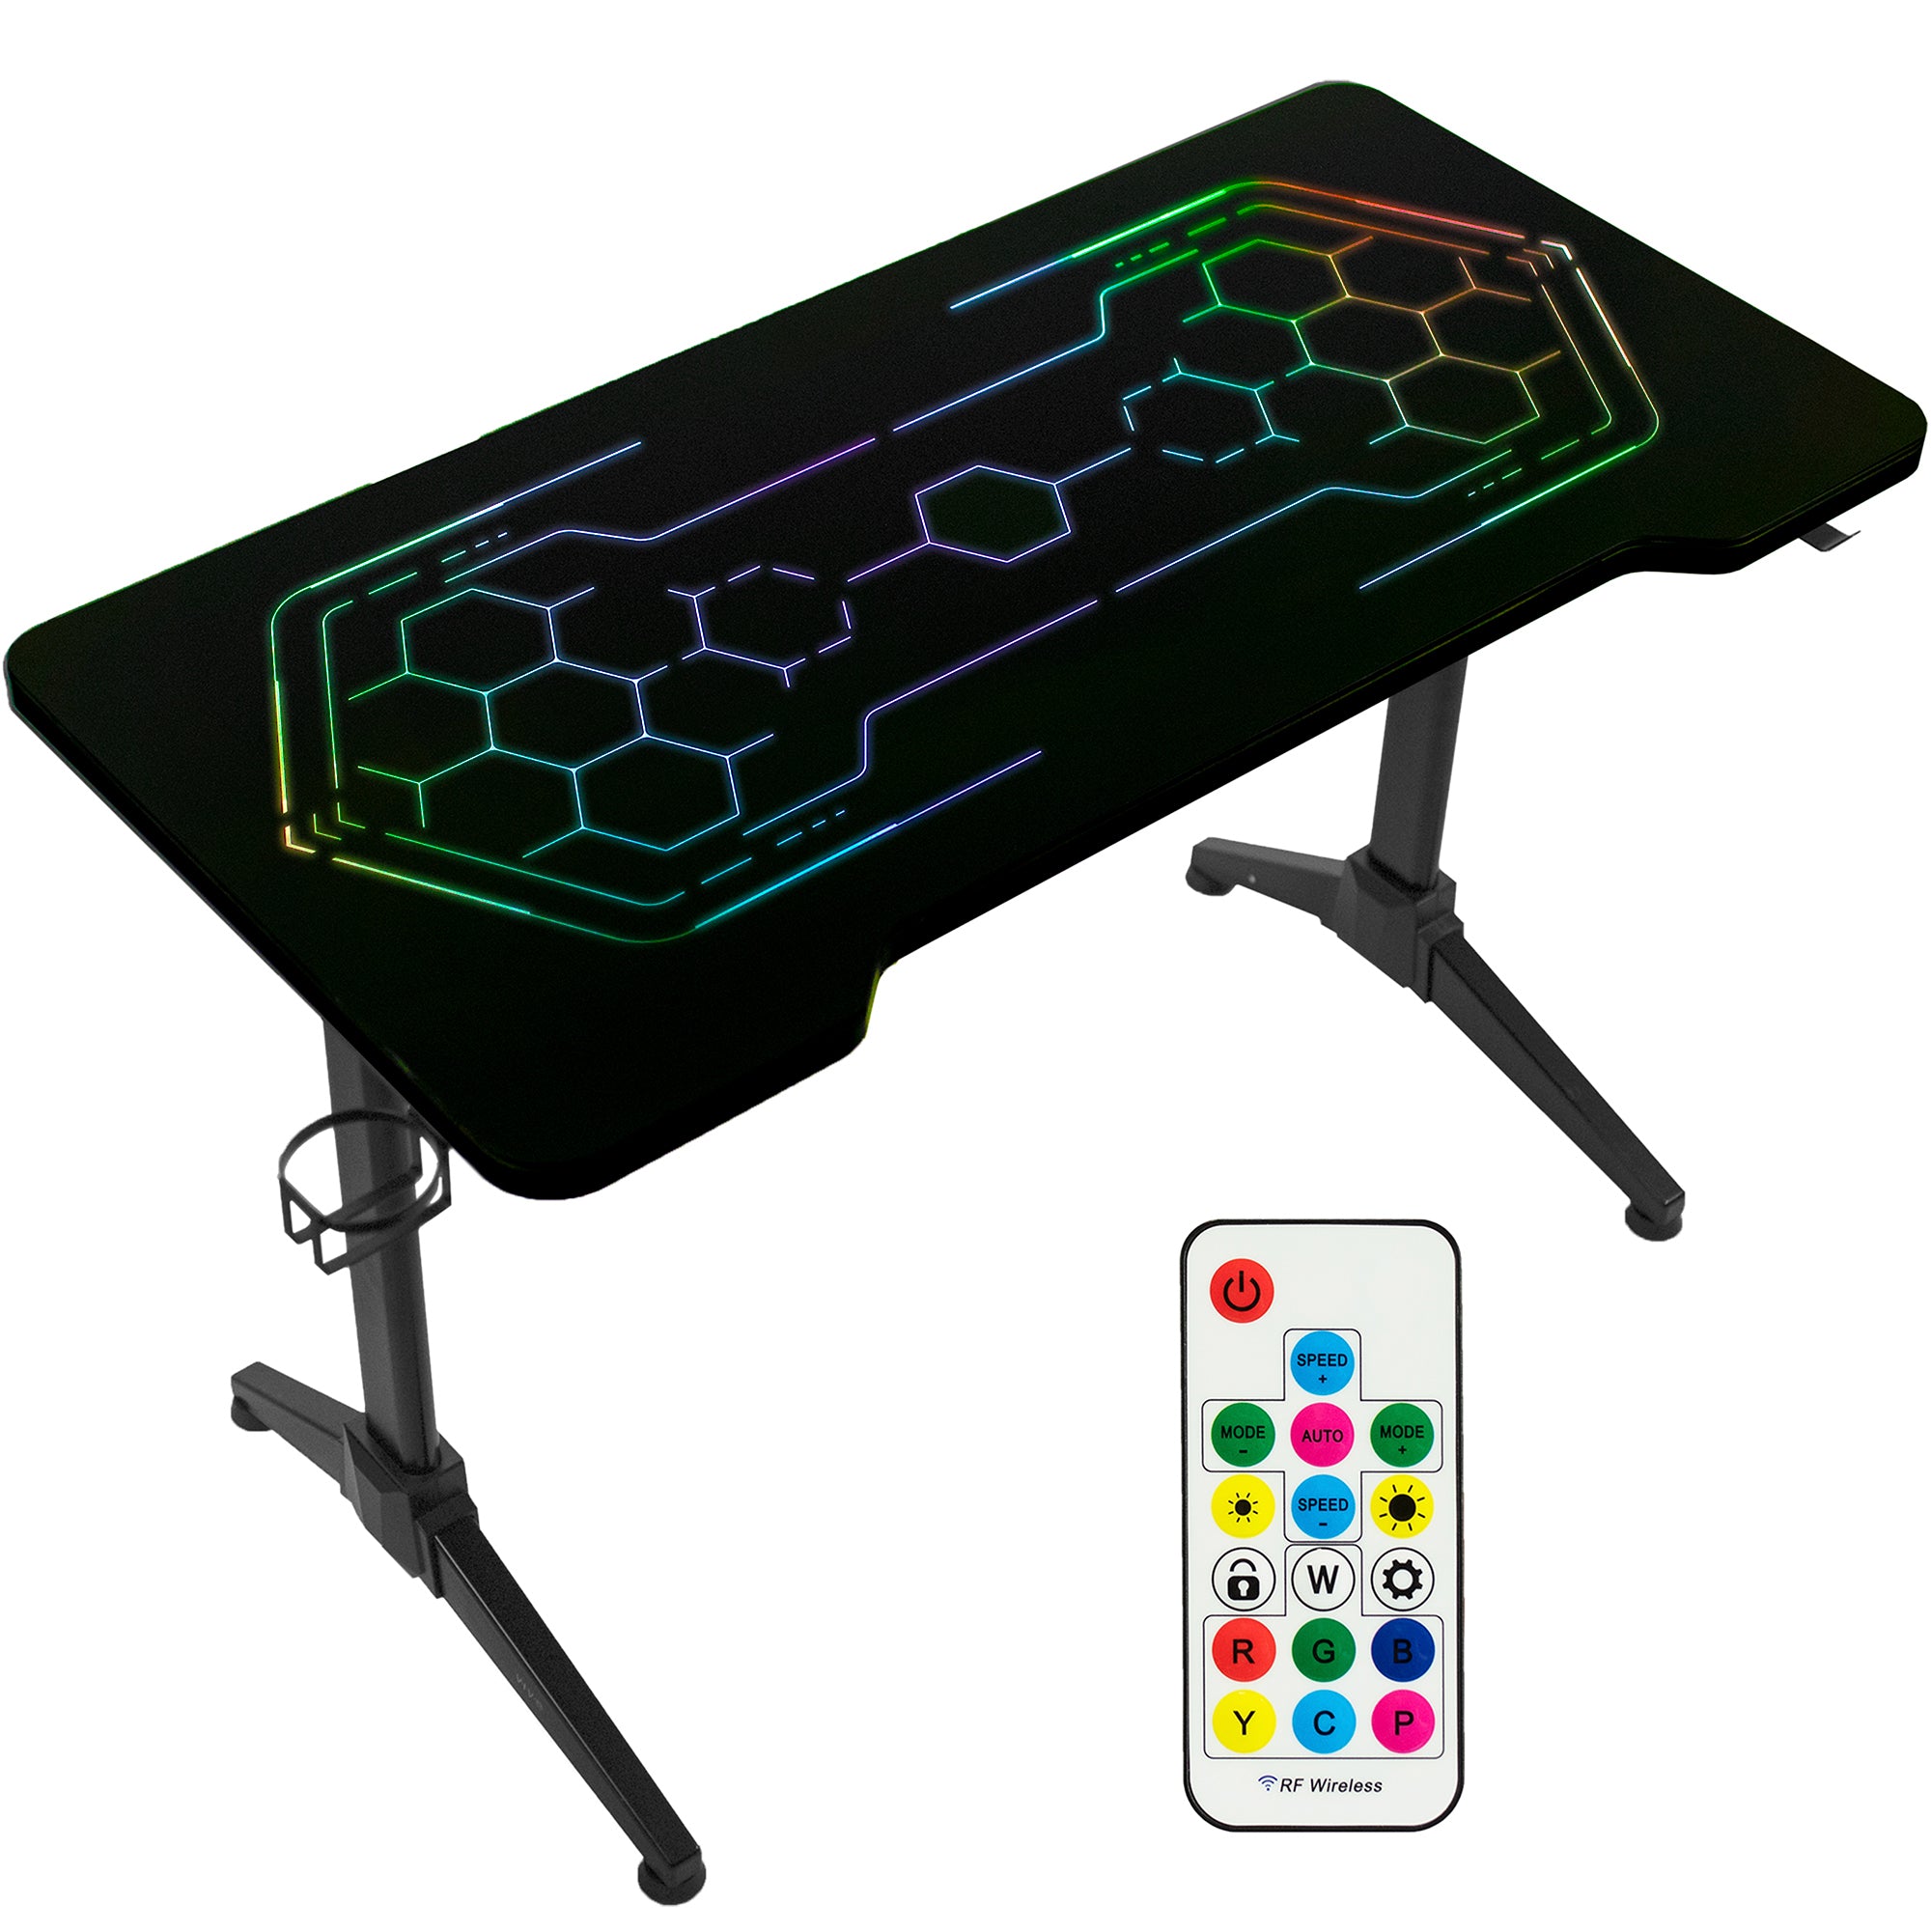 latest design rgb led gaming table